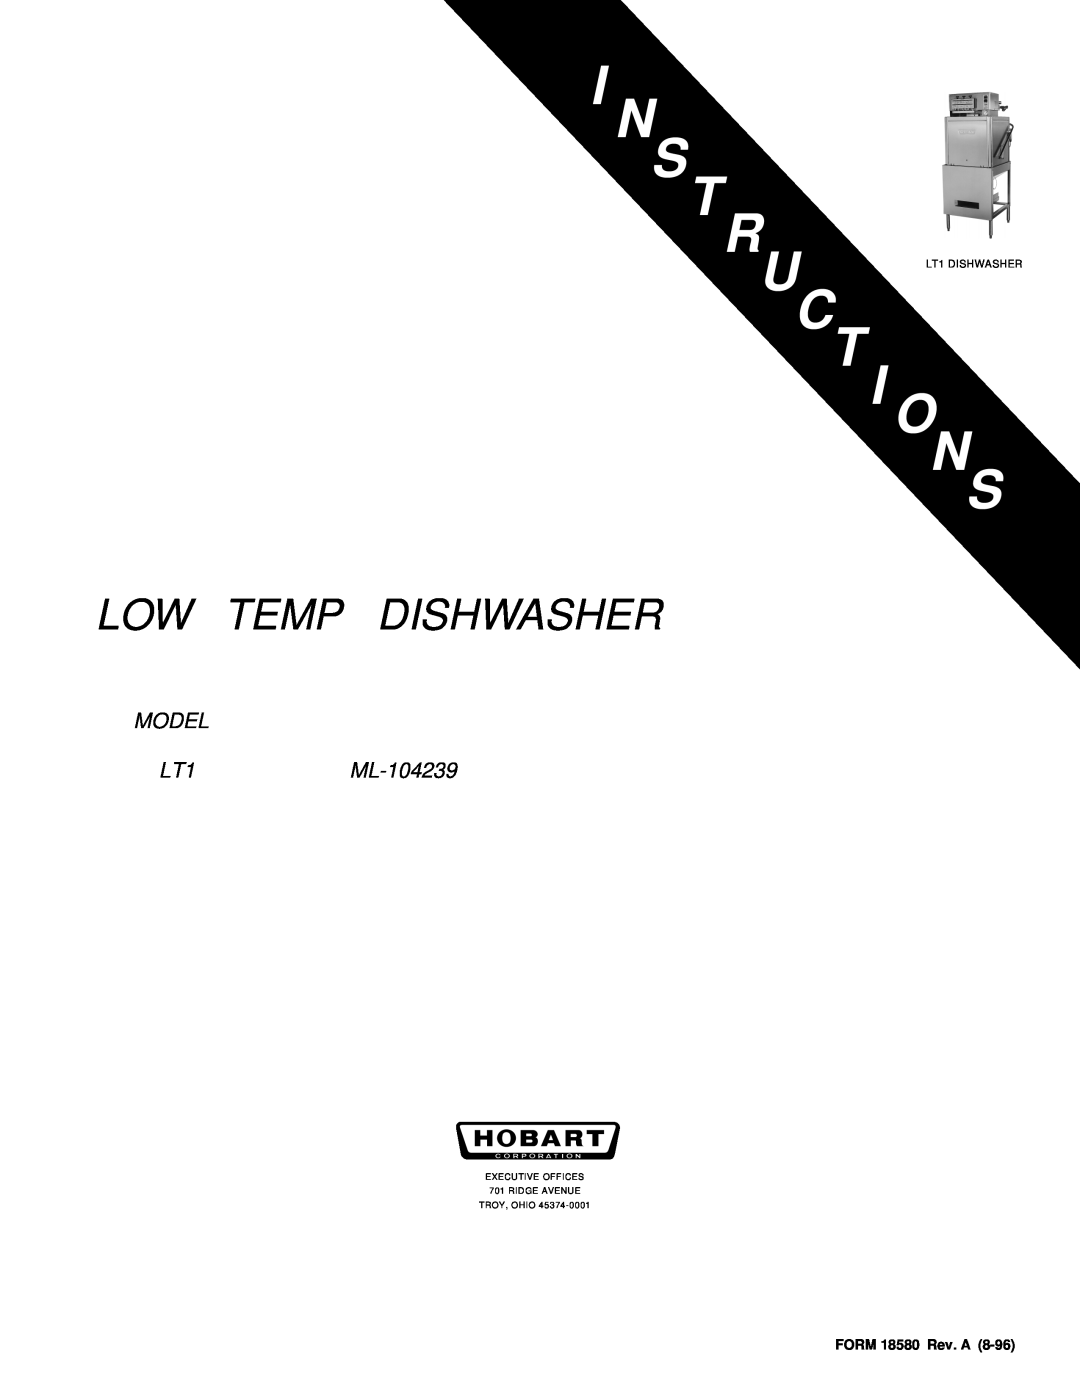 Hobart LT1 ML-104239 manual Ct I Ons, Low Temp Dishwasher, MODEL LT1ML-104239, FORM 18580 Rev. A, TRU LT1 DISHWASHER 